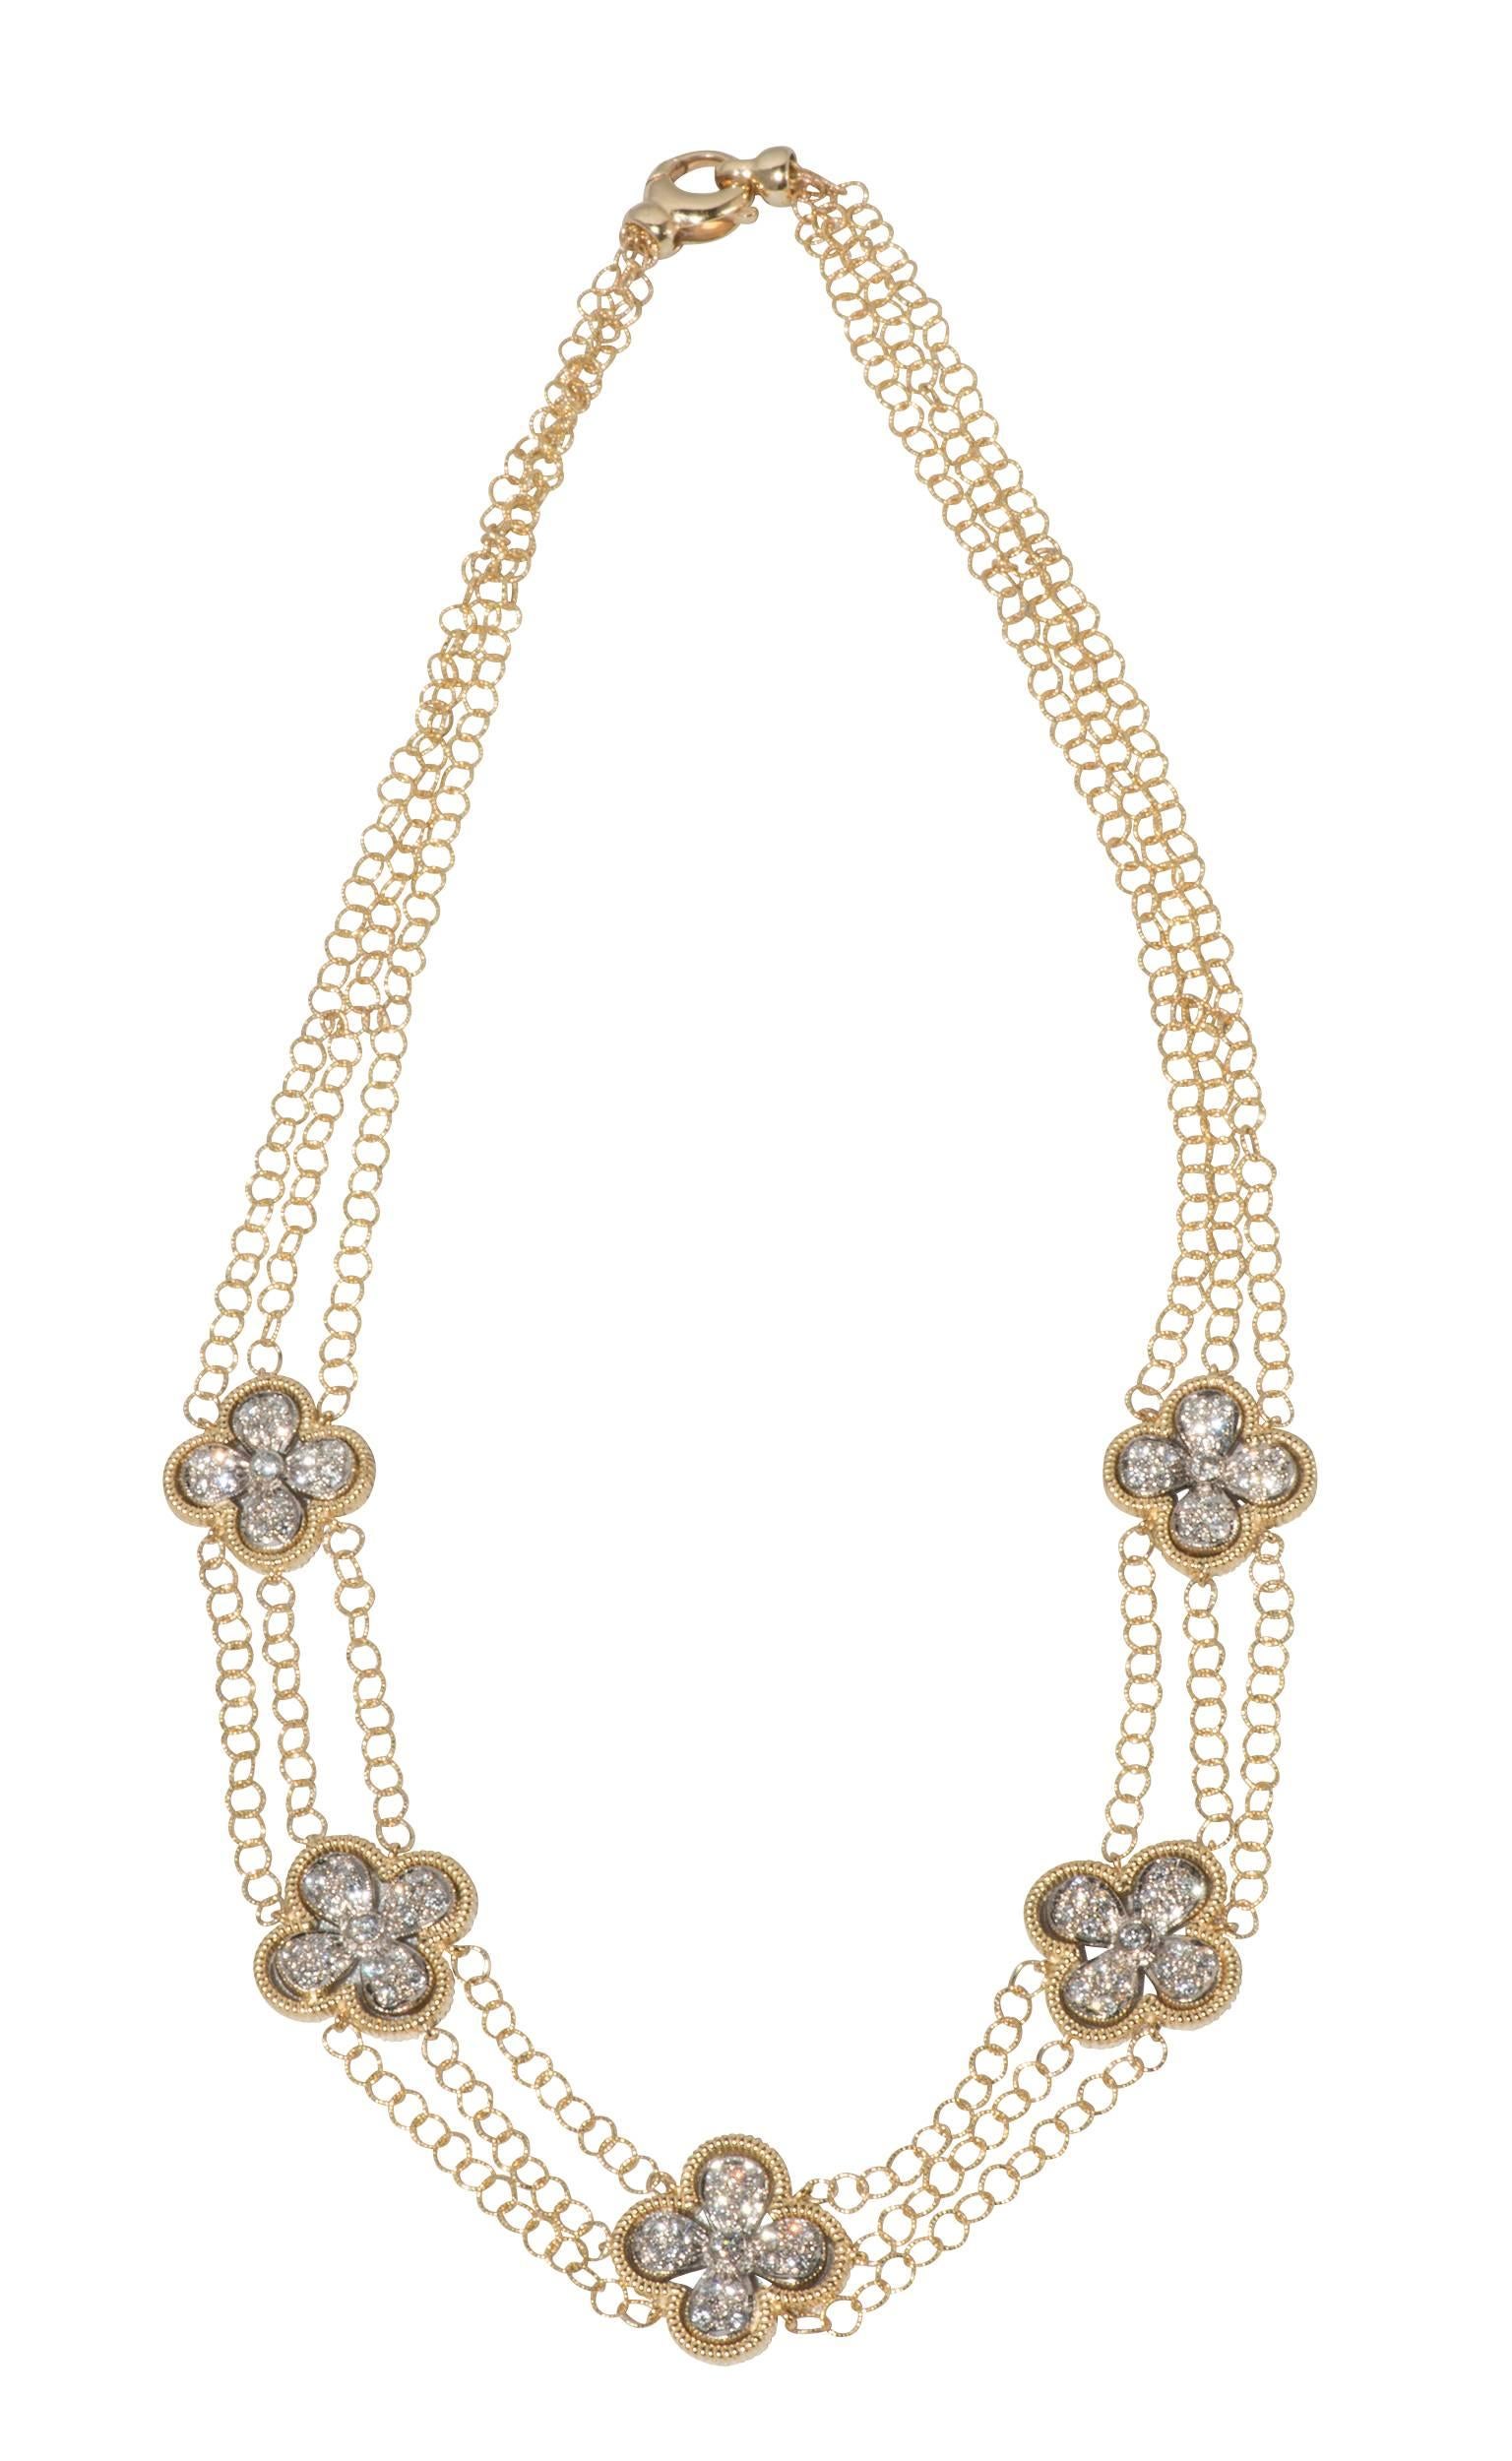 Diamond Gold Quatrefoil Necklace In Excellent Condition For Sale In Houston, TX